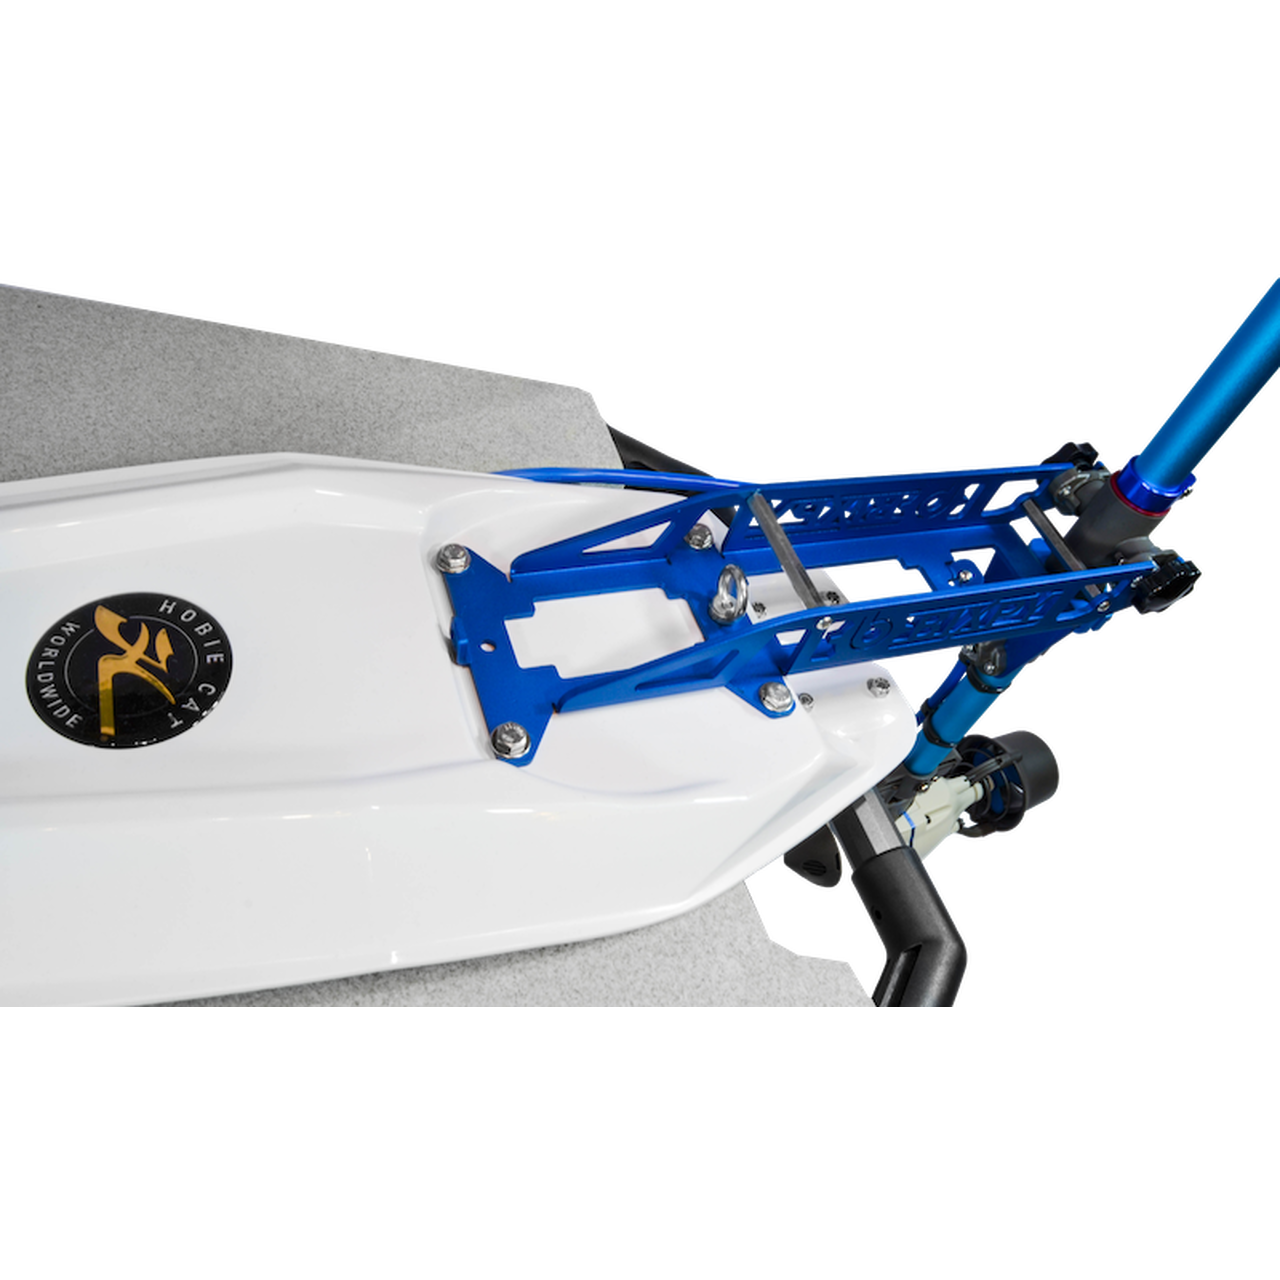 Bixpy Hobie Pro Angler With Hobie Plate For J-2 Motor AT-PPP-2104